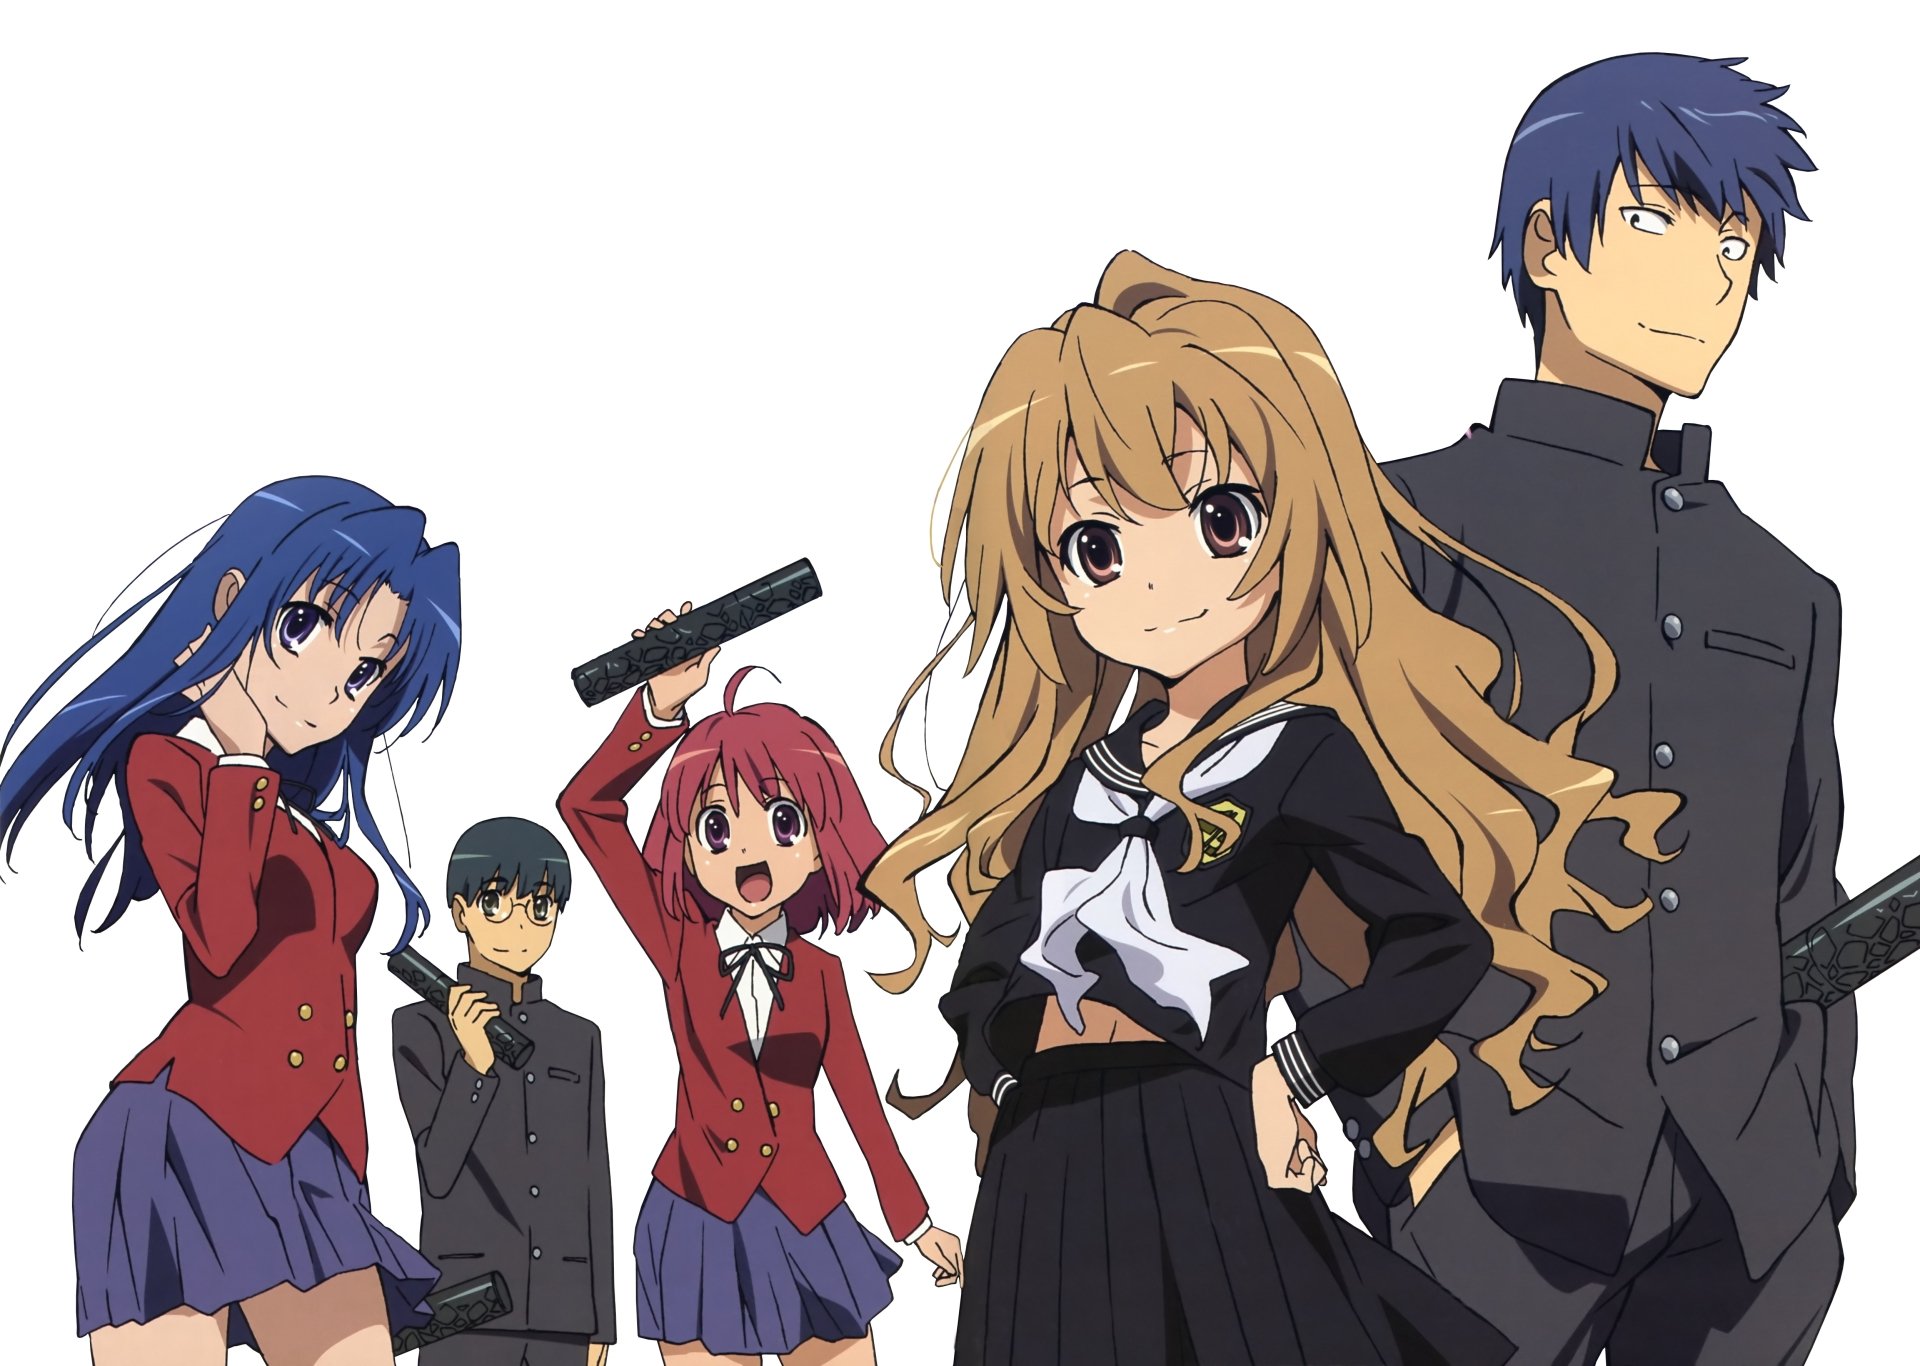 Download wallpaper 840x1160 toradora!, anime, characters, iphone 4